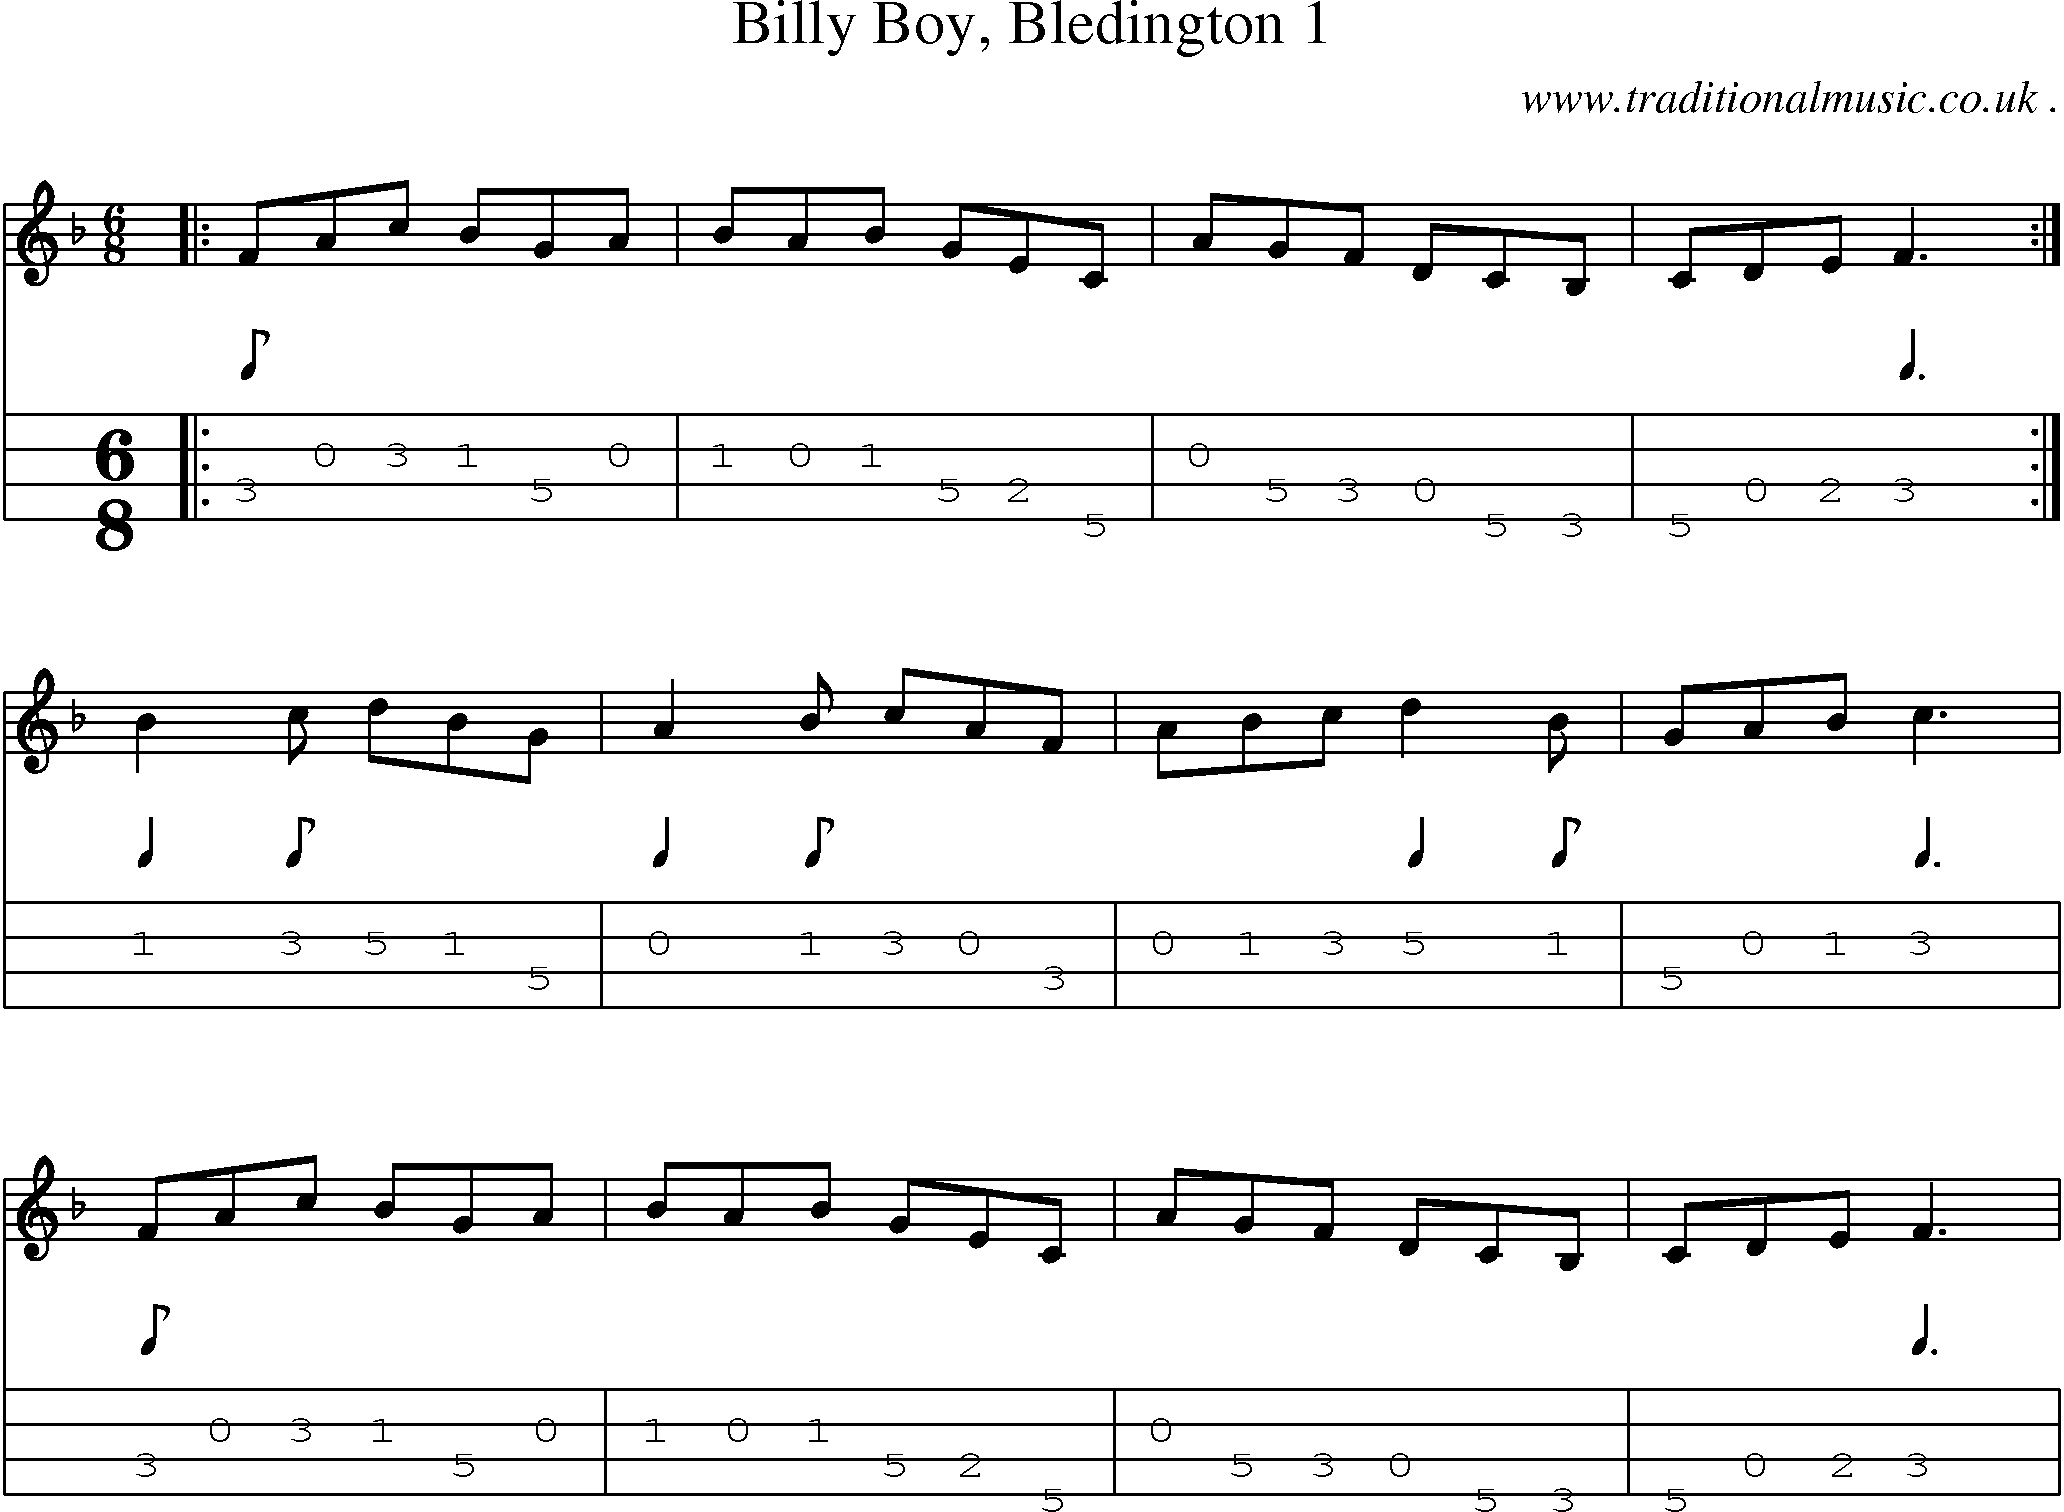 Sheet-Music and Mandolin Tabs for Billy Boy Bledington 1